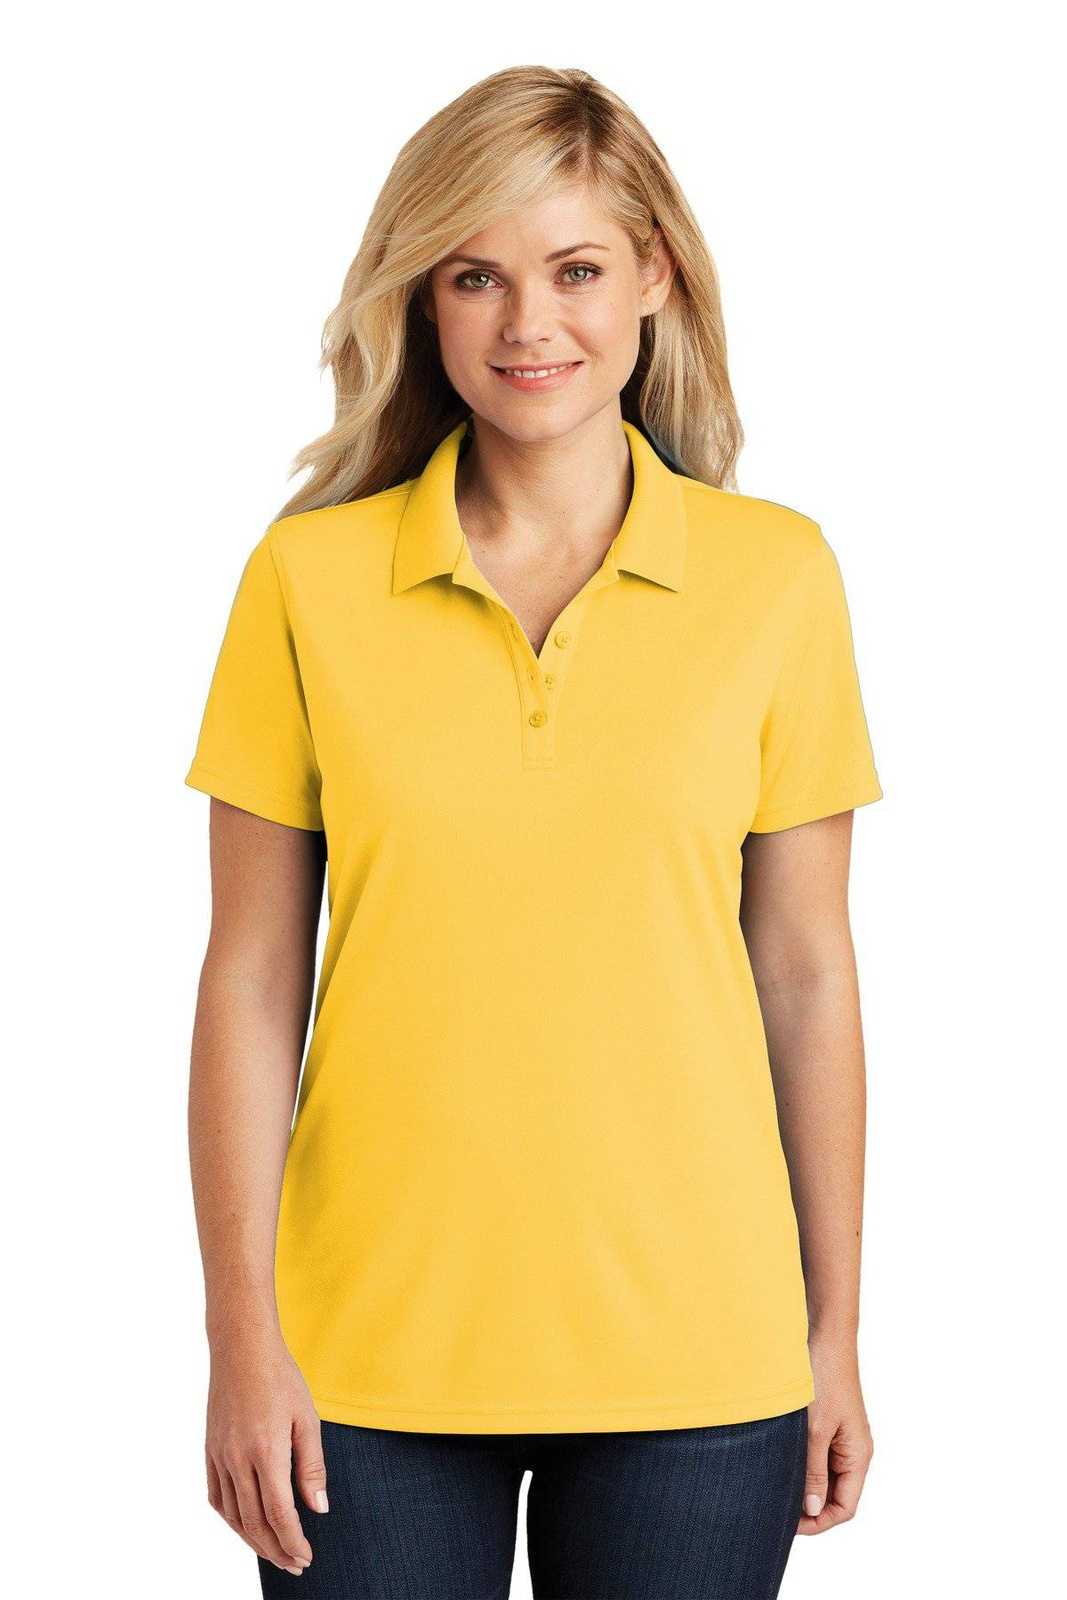 Port Authority LK110 Ladies Dry Zone UV Micro-Mesh Polo - Sunburst Yellow - HIT a Double - 1